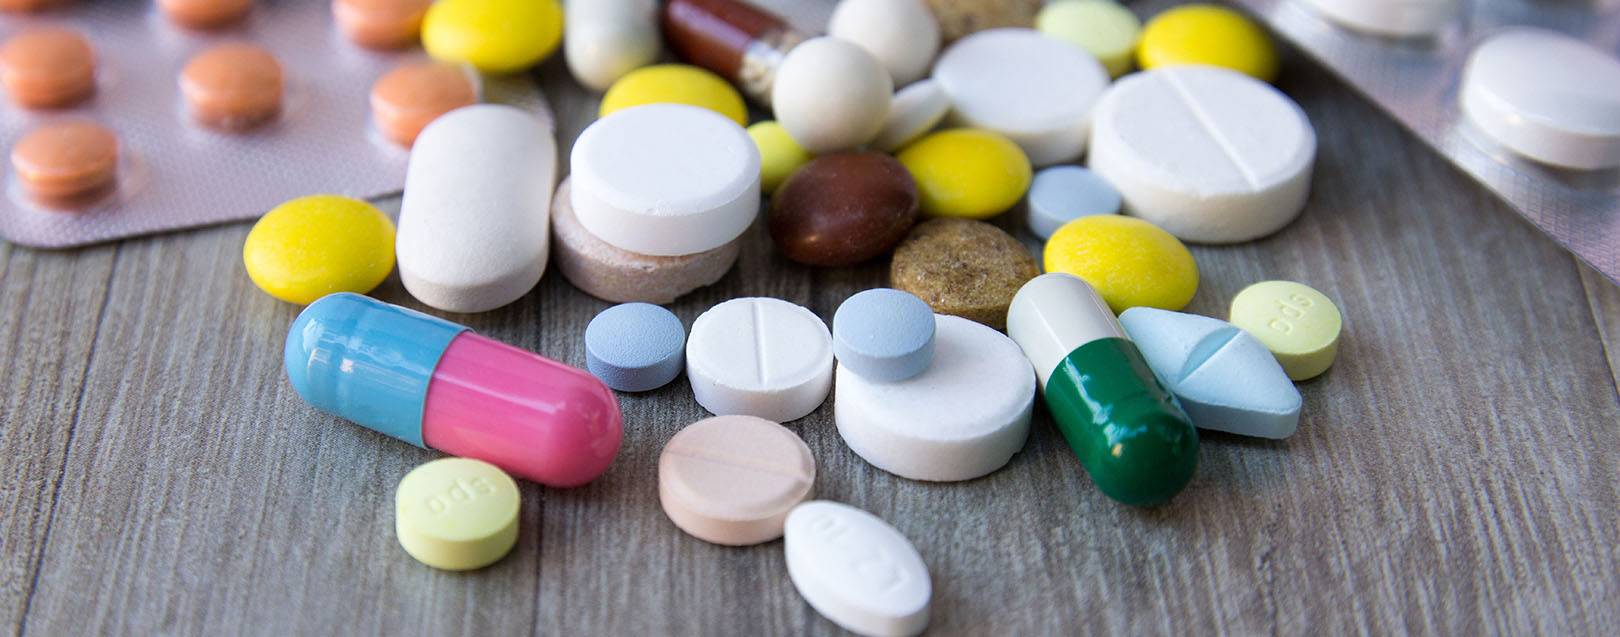 UFDA bans drugs import from Badrivishal Chemicals